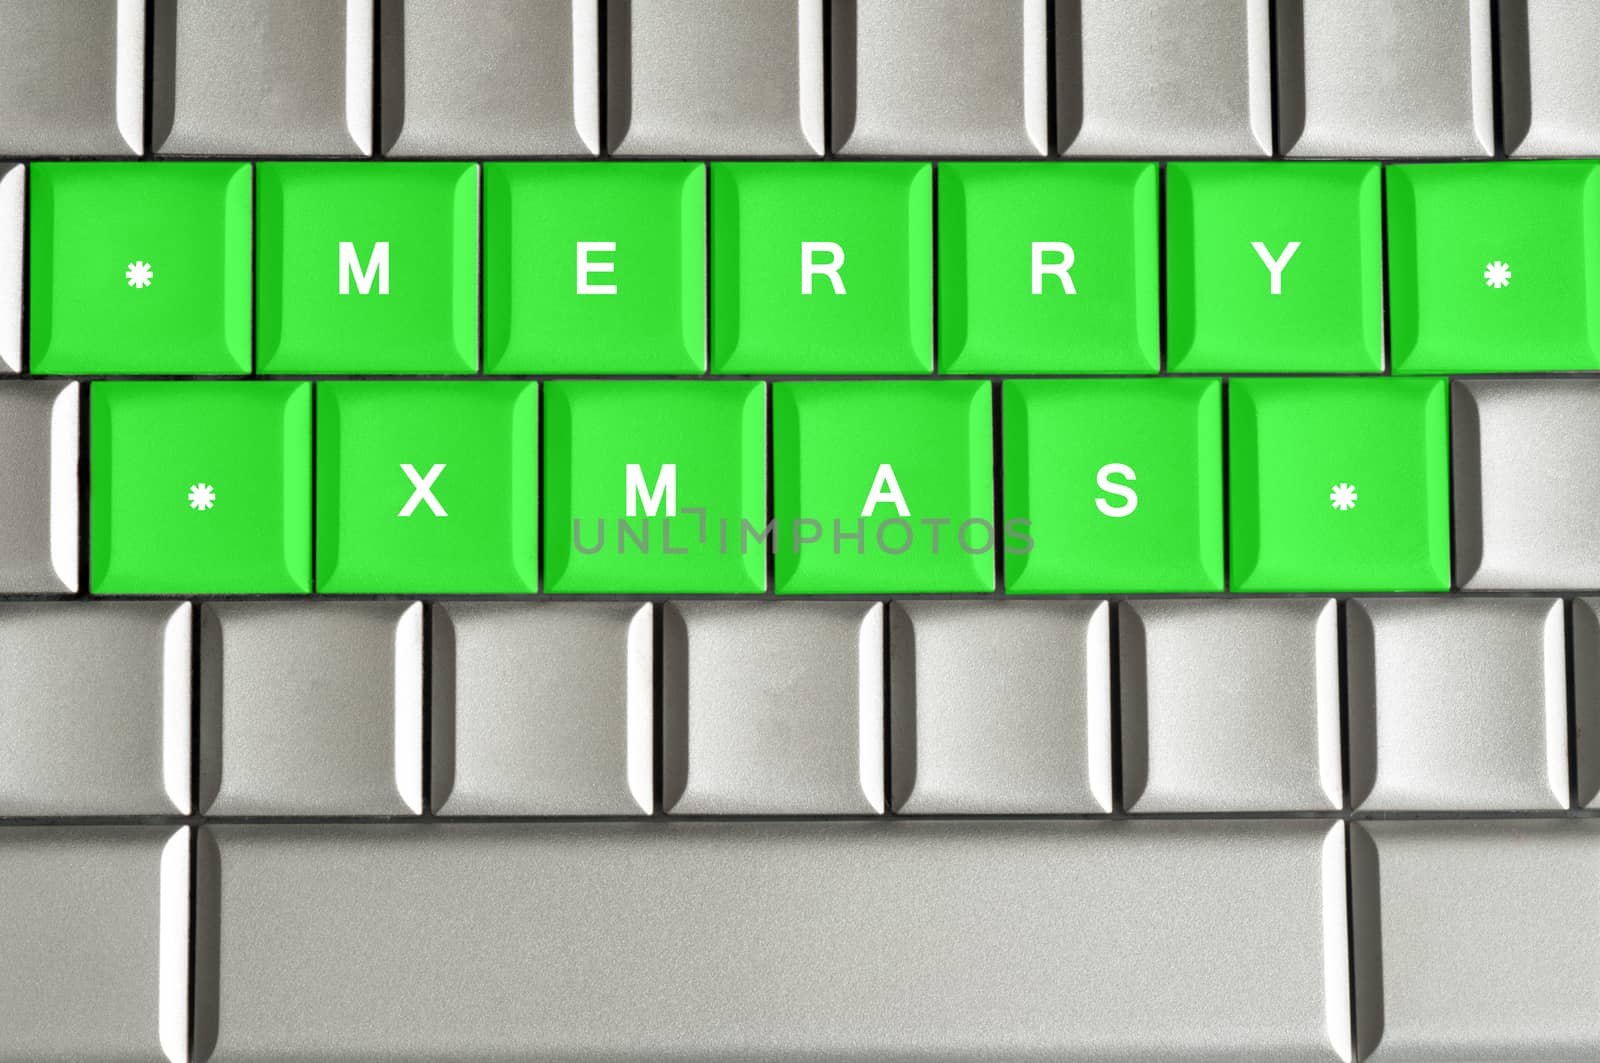 Merry Xmas spelled on a silver metallic keyboard